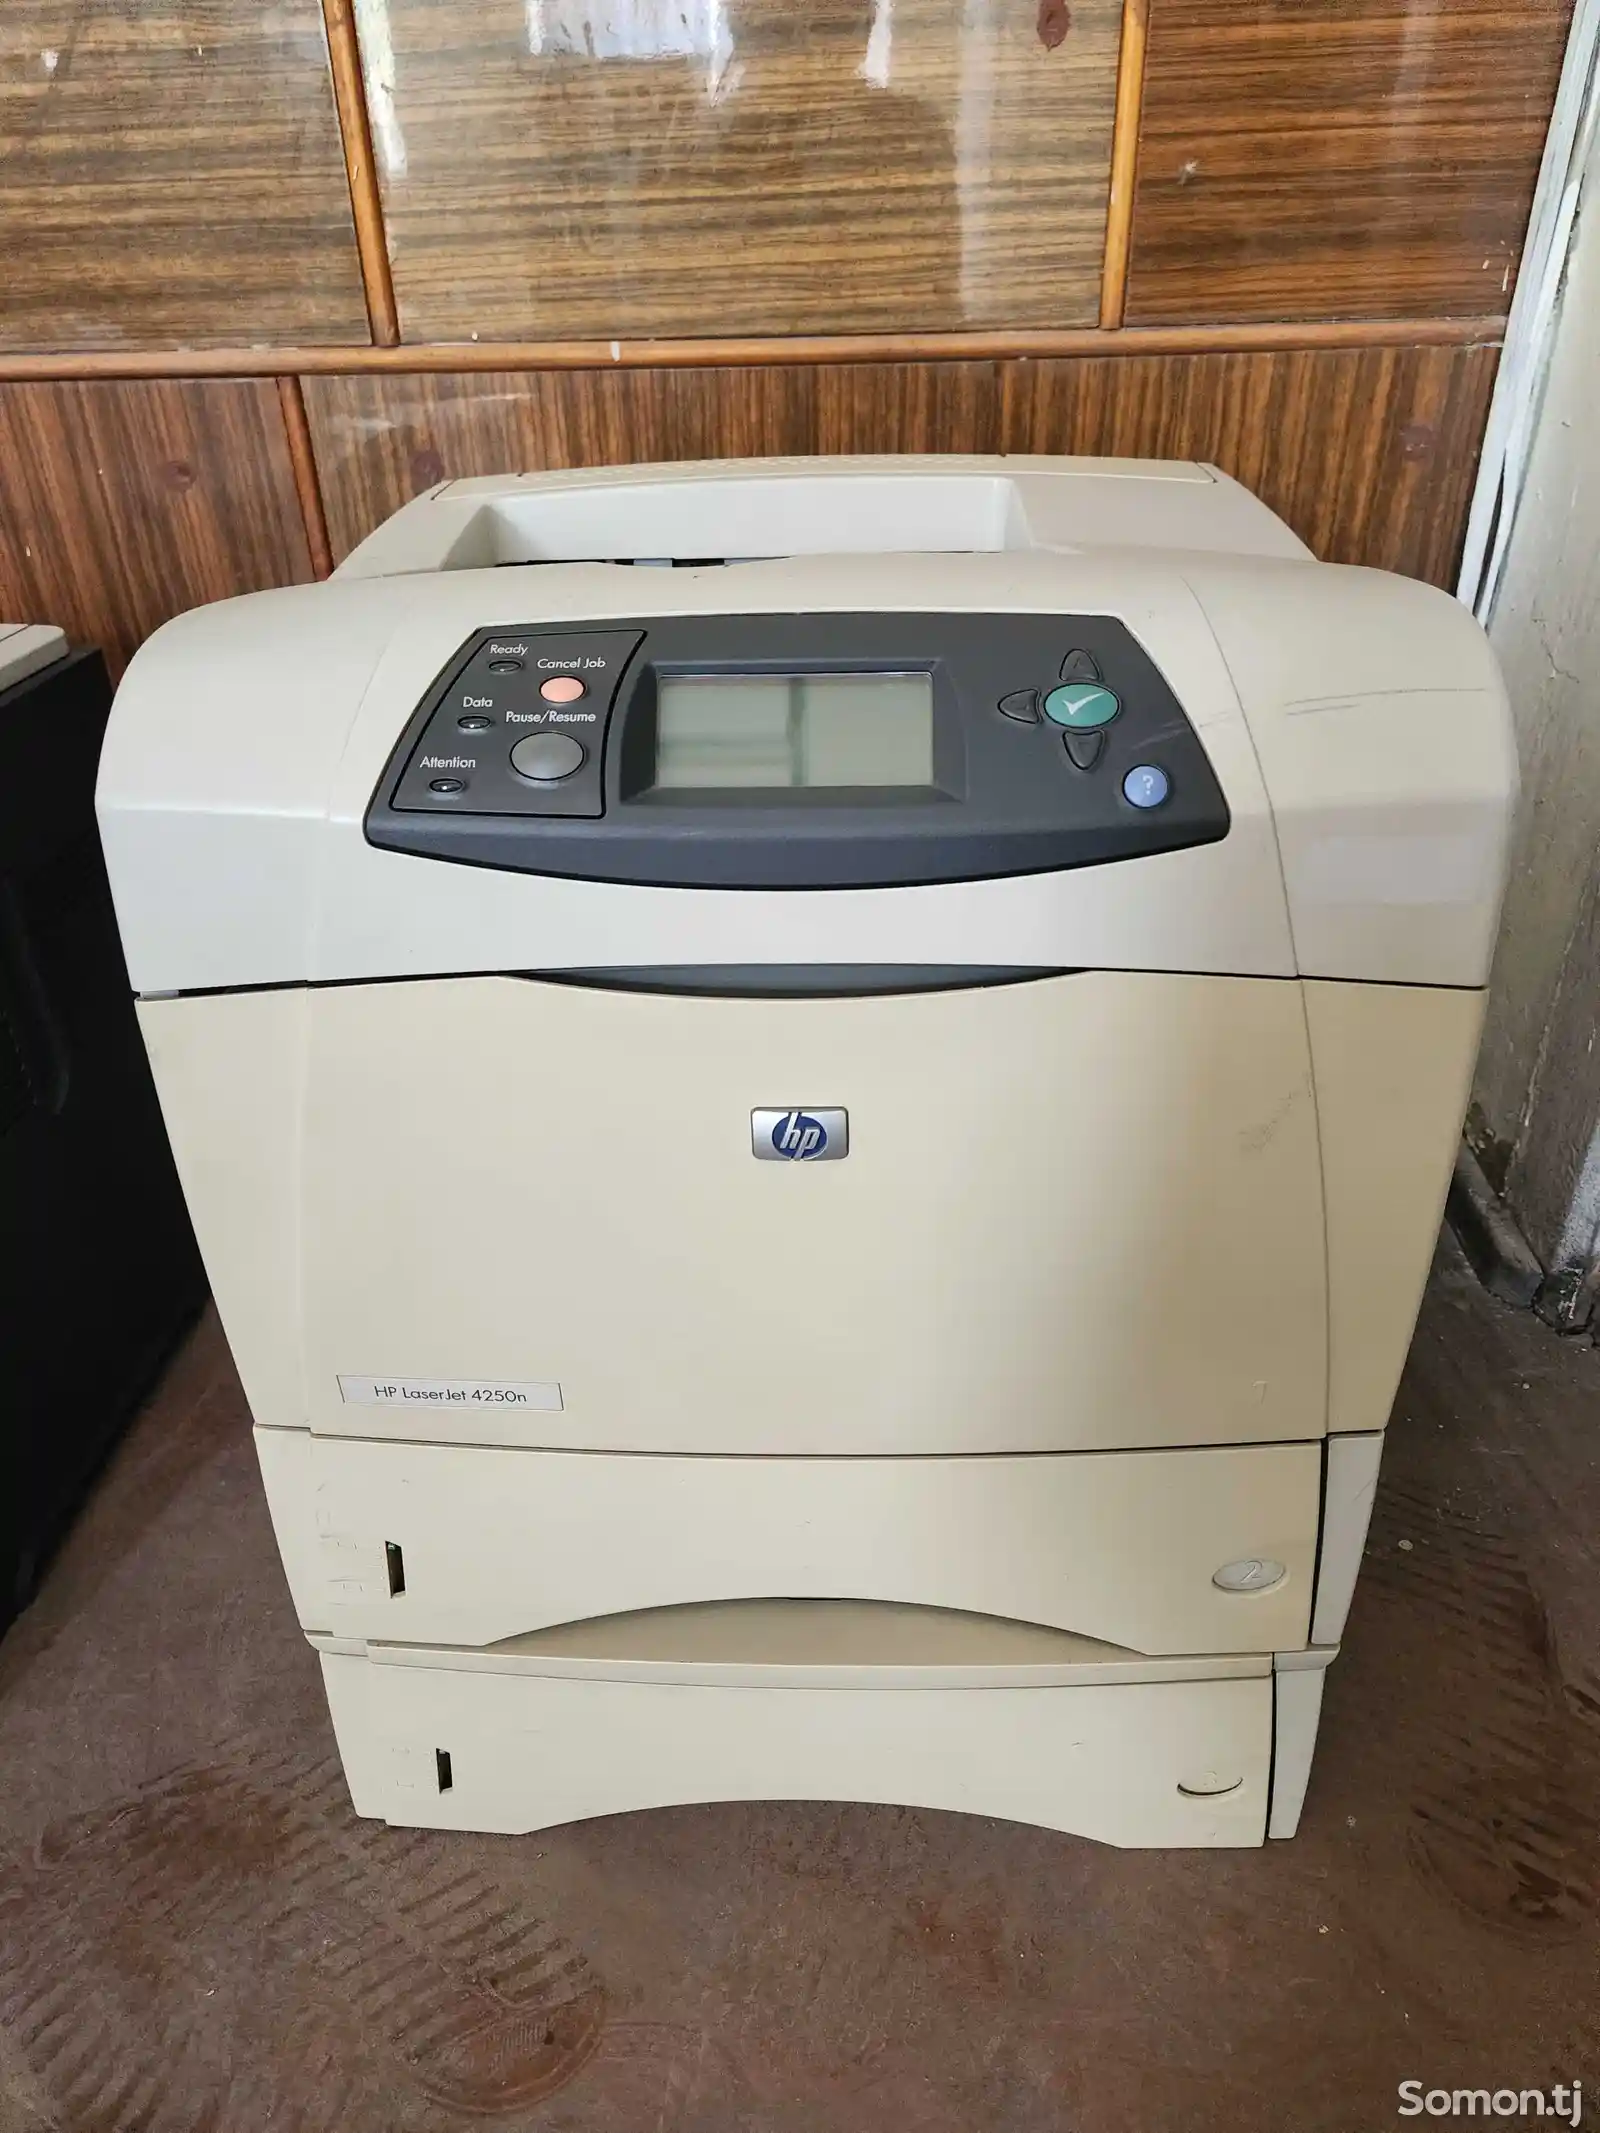 Принтер HP LJ 4250n